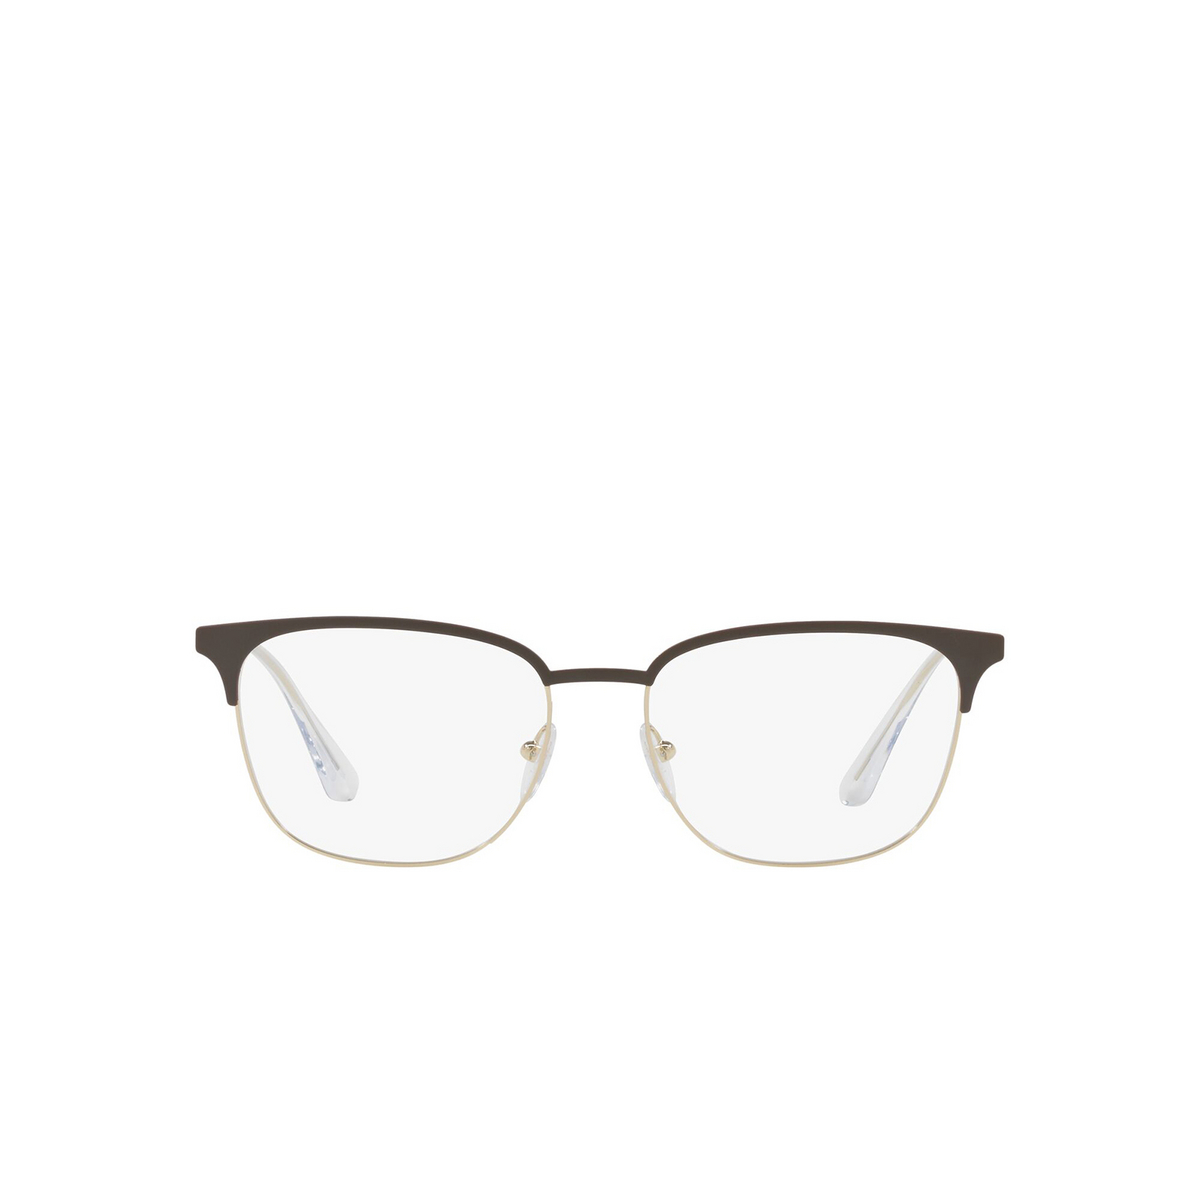 Prada PR 59UV Eyeglasses 0Y11O1 Matte Brown / Pale Gold - front view